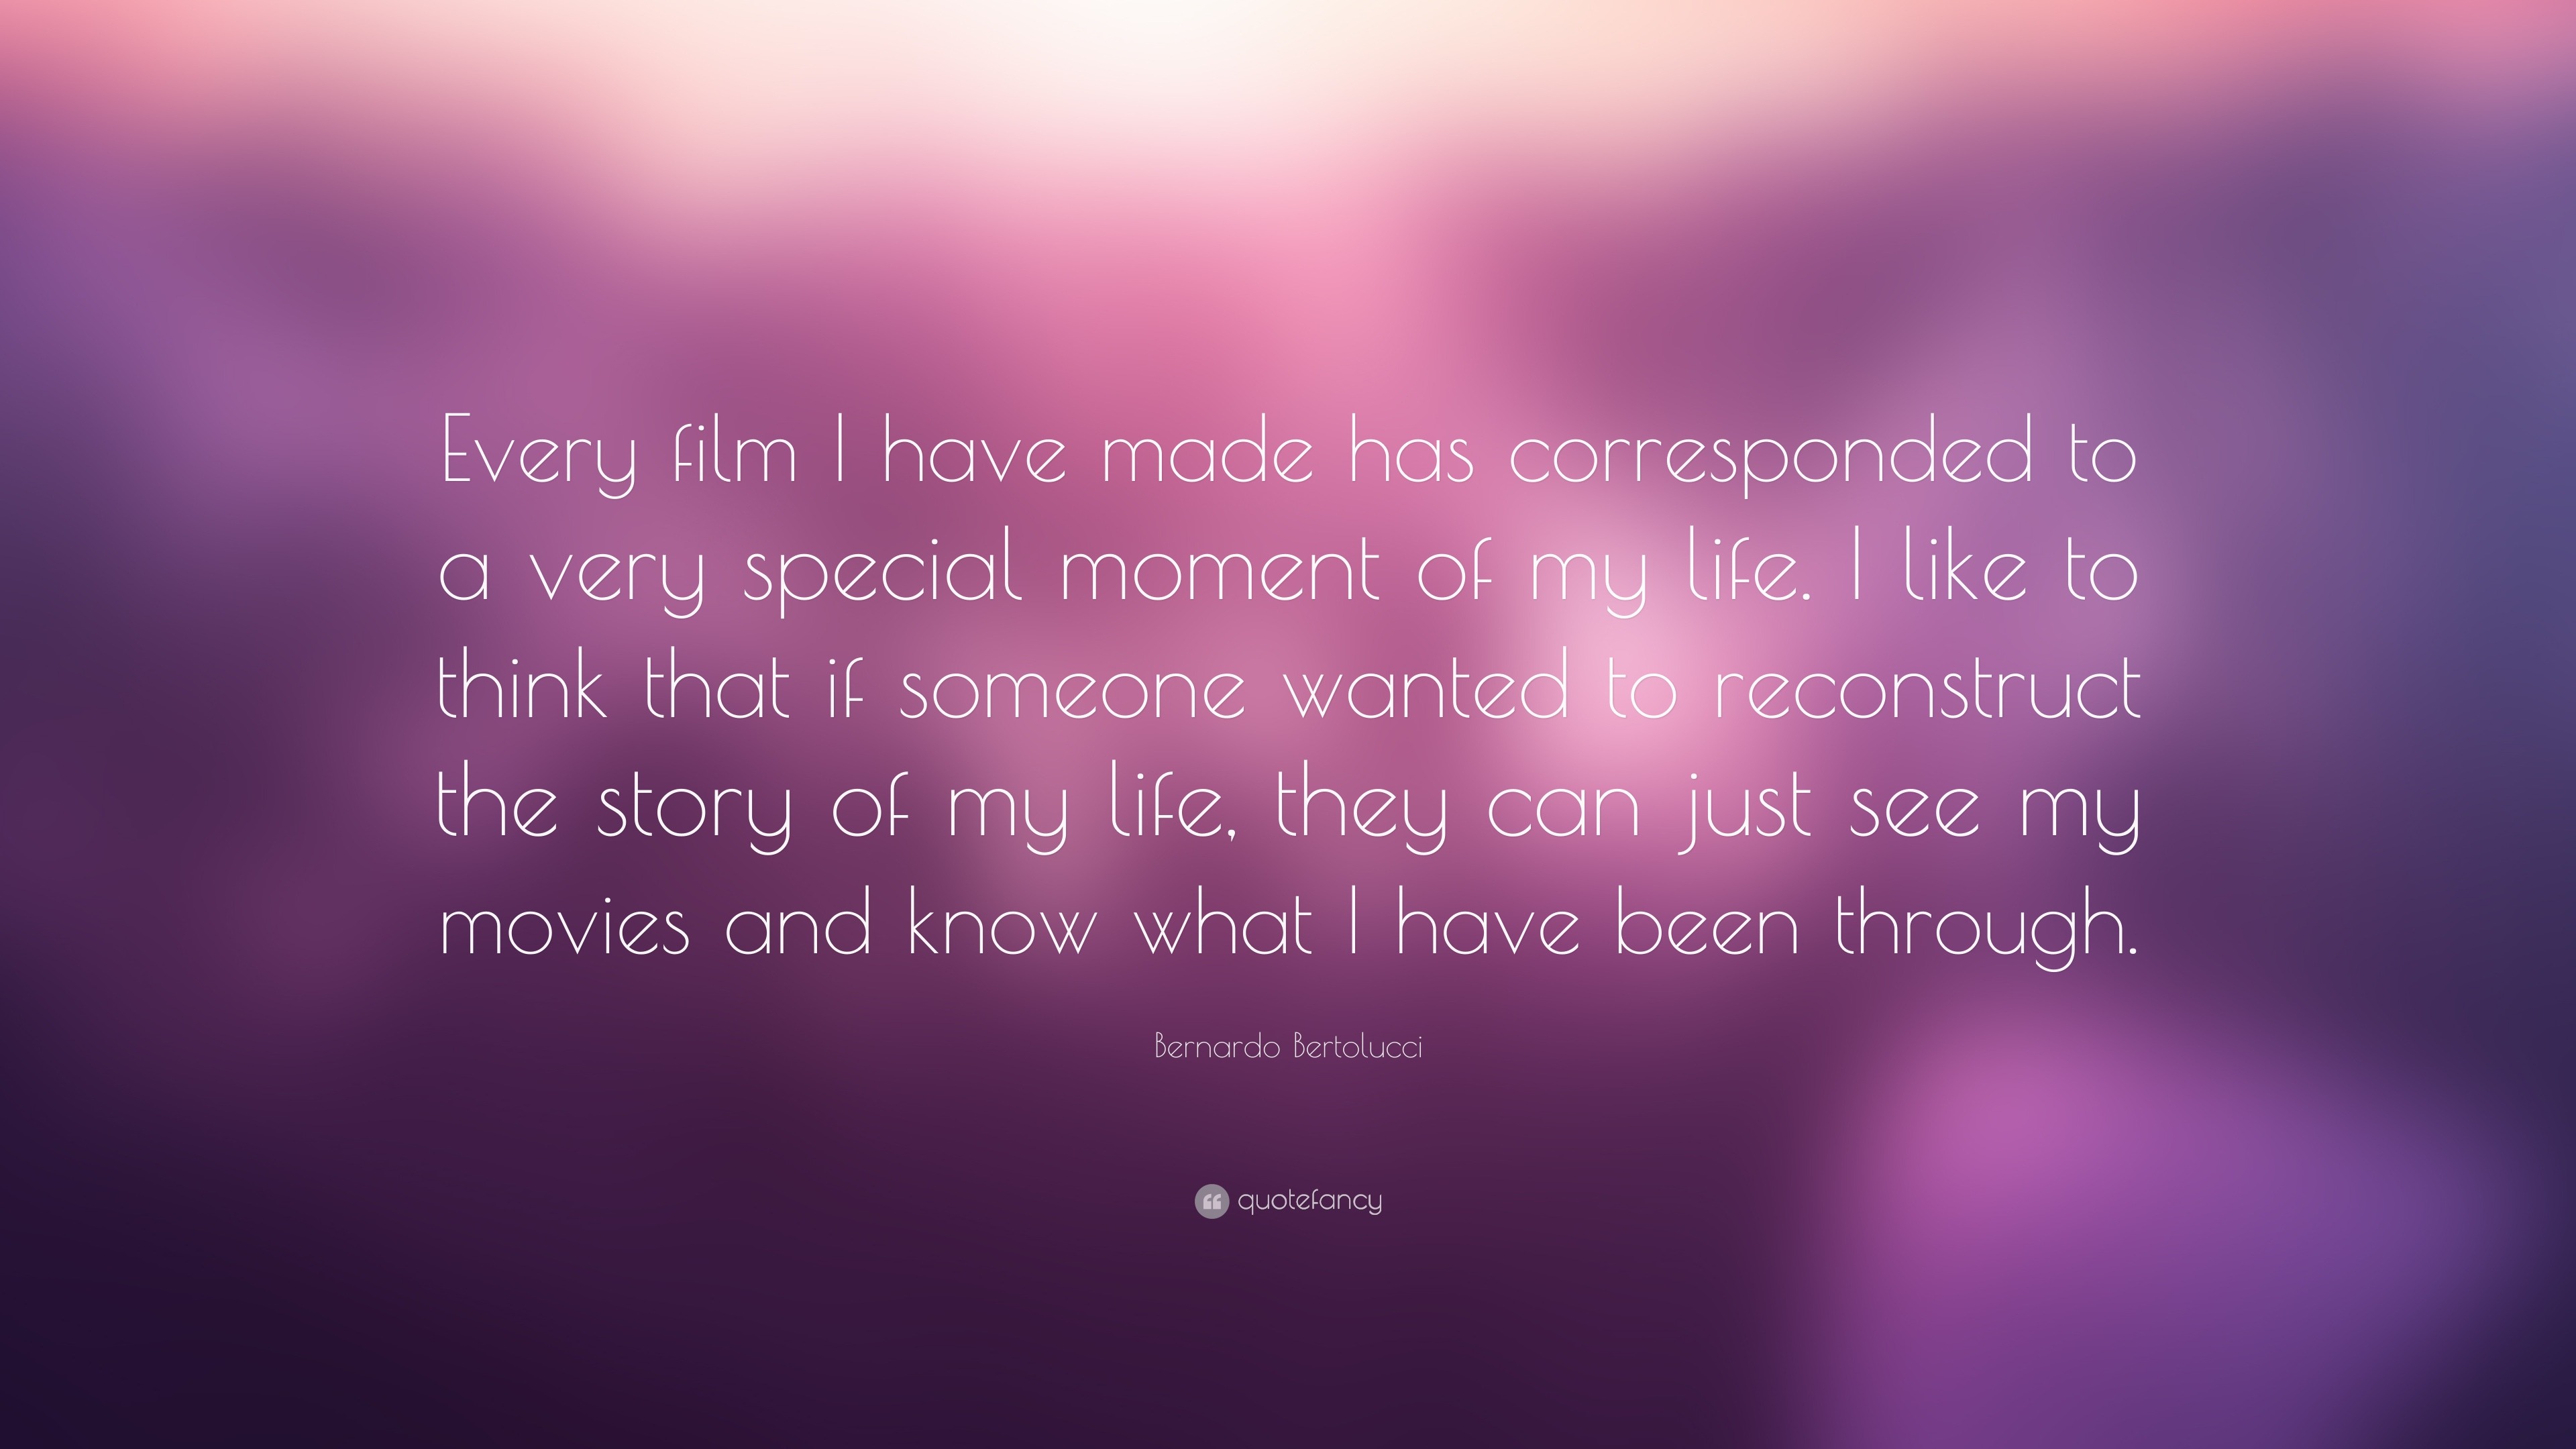 Bernardo Bertolucci Quote: “Every film I have made has corresponded to ...